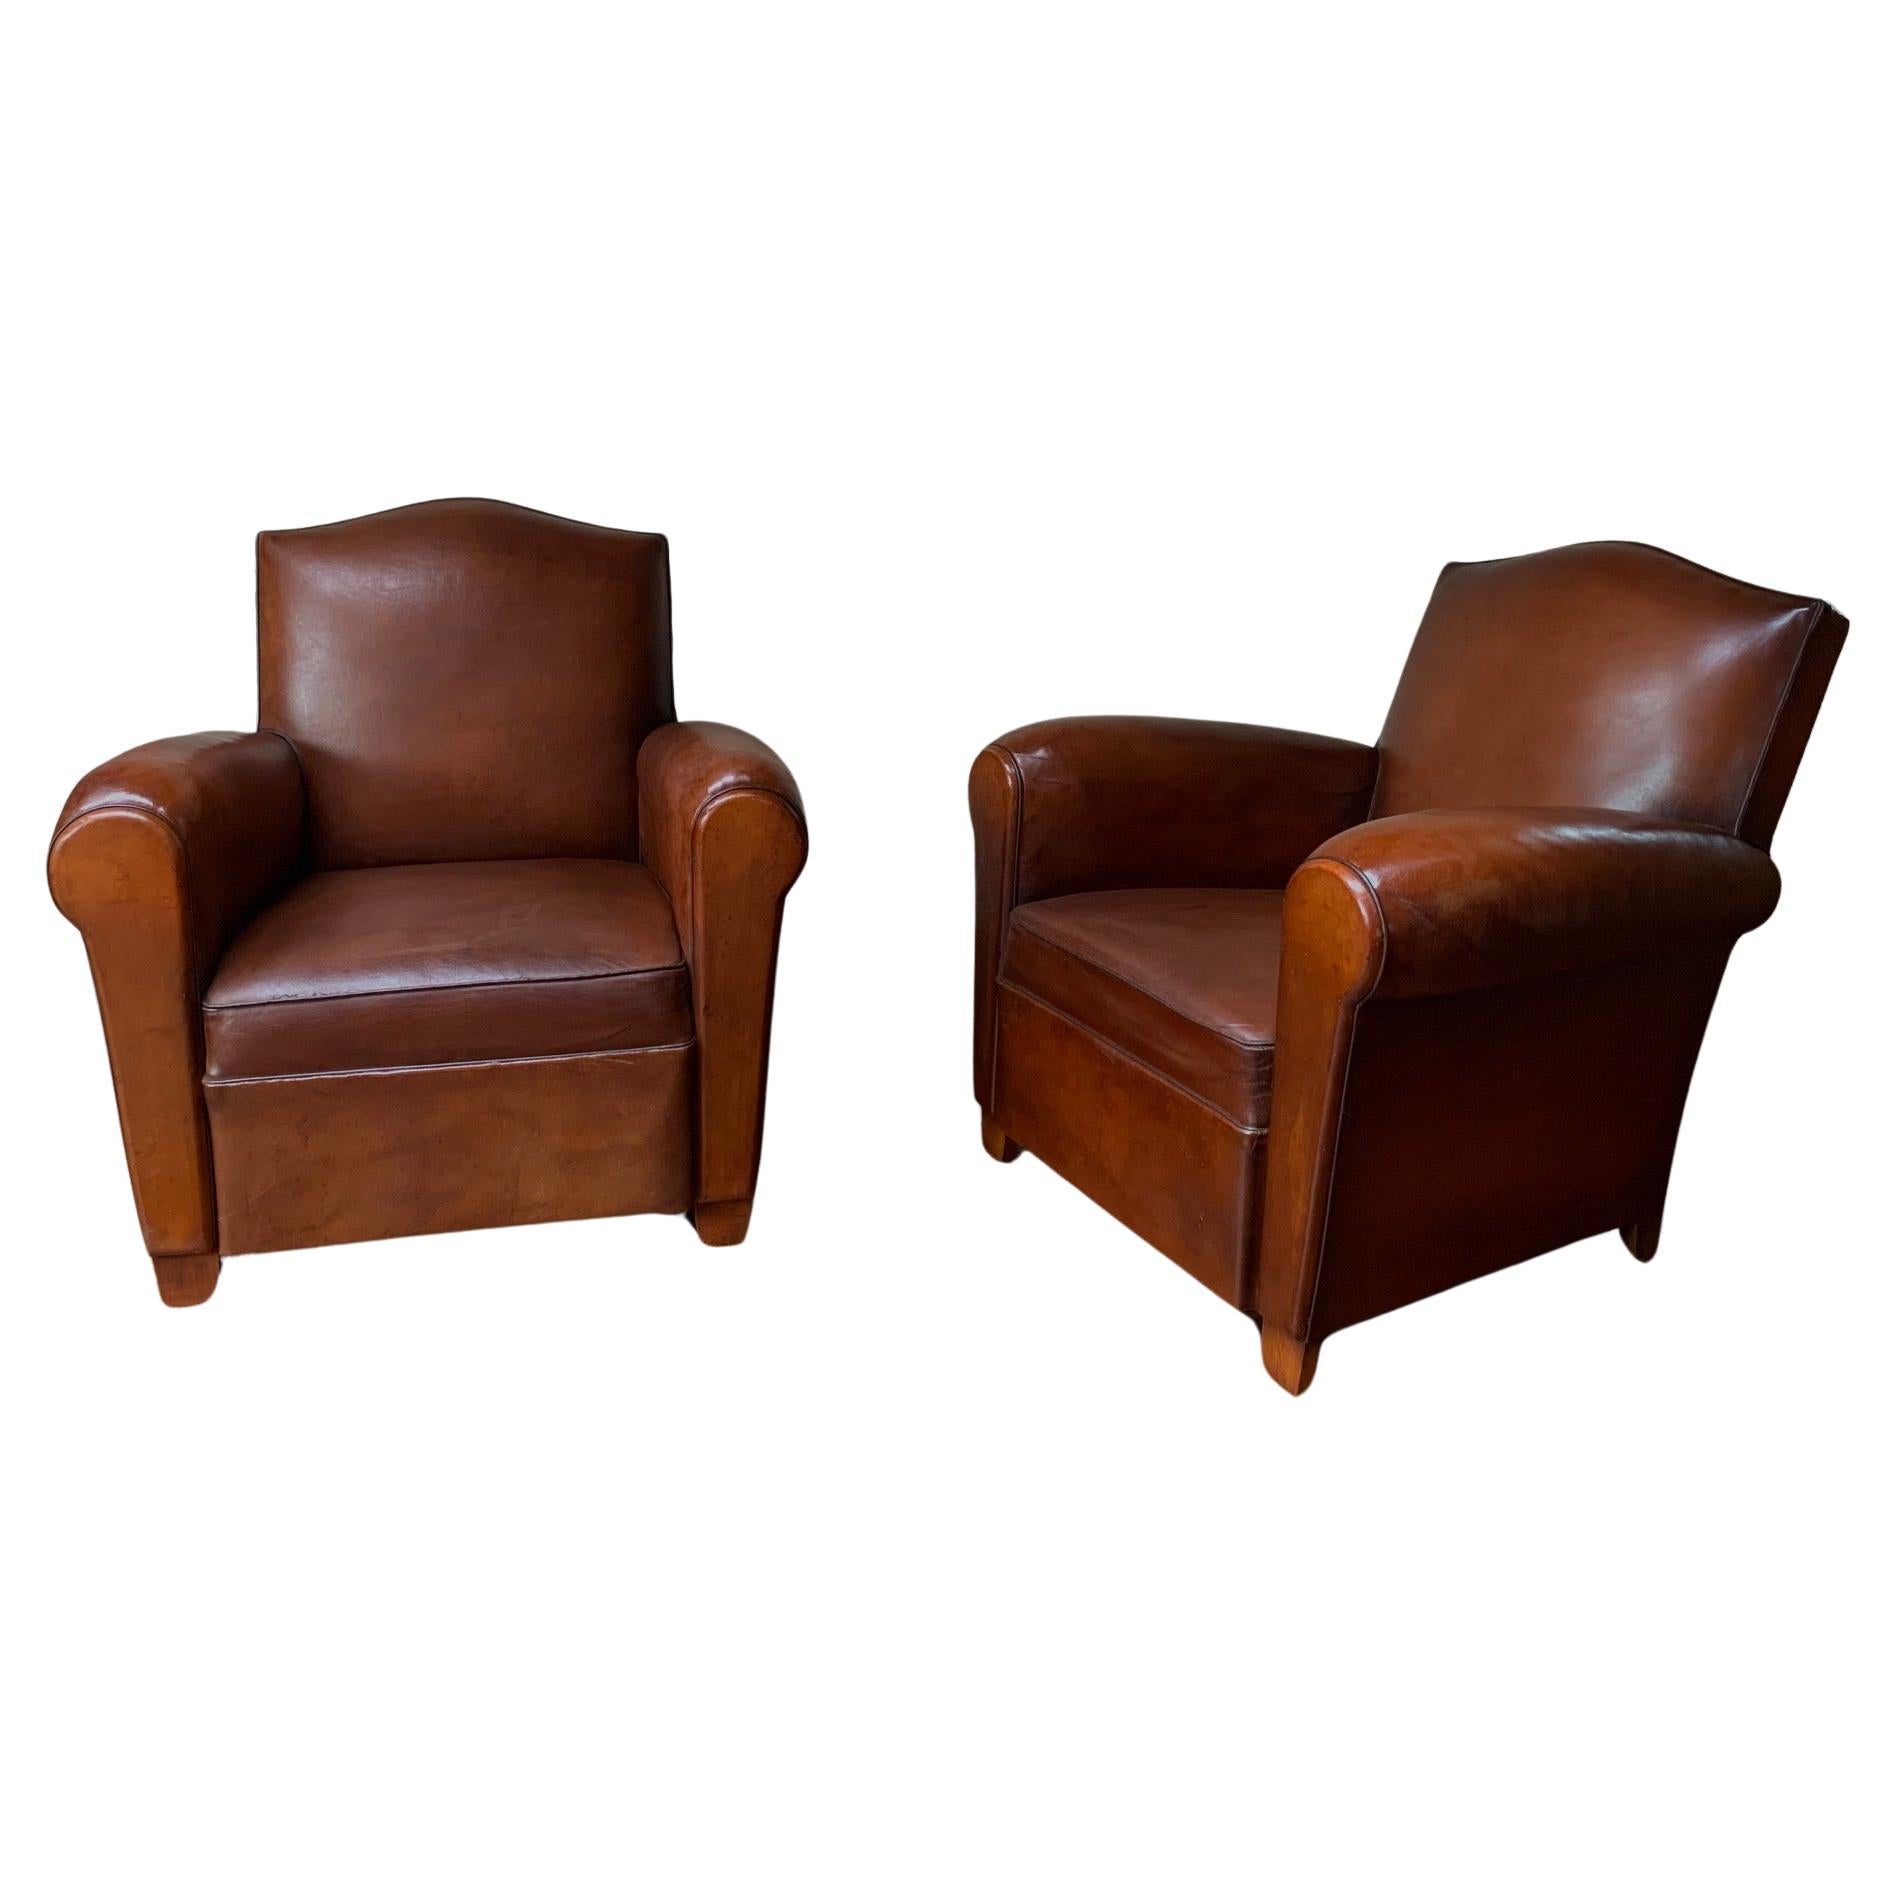 A Wonderful Pair of French Leather Club Chairs Chapeau du Gendarme Models, C1950